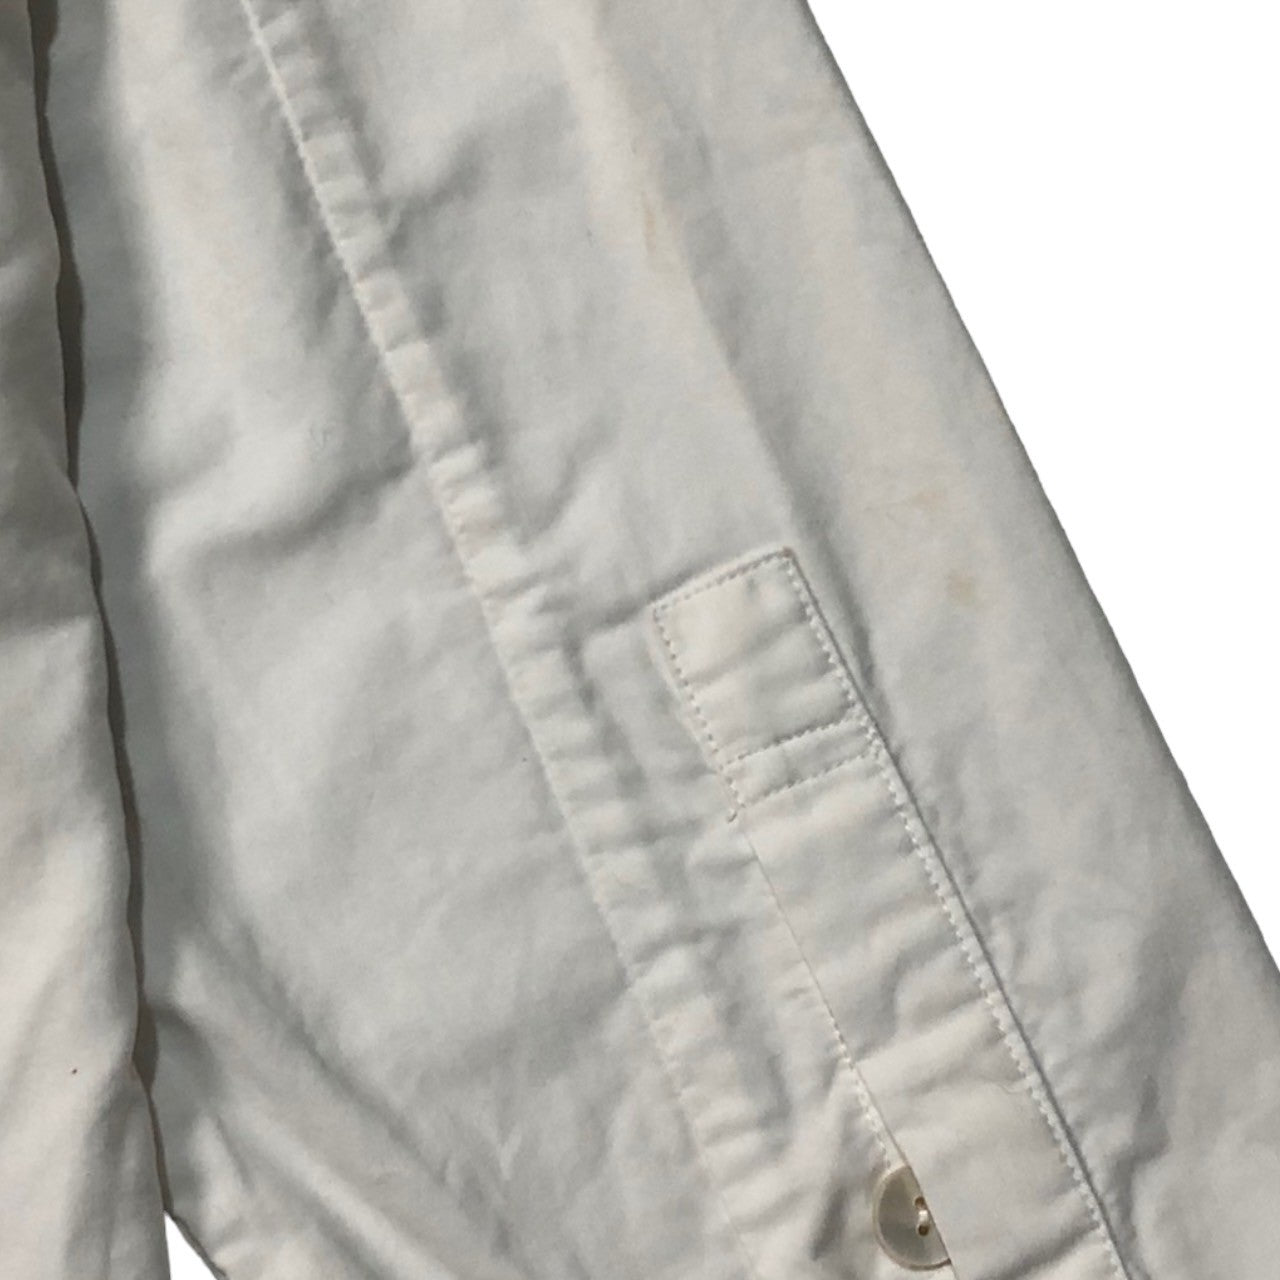 SUNSEA(サンシー) 2 pocket regular collar shirt/2ポケット比翼レギュラーカラーシャツ SNS-13A11 2(Mサイズ程度) ホワイト